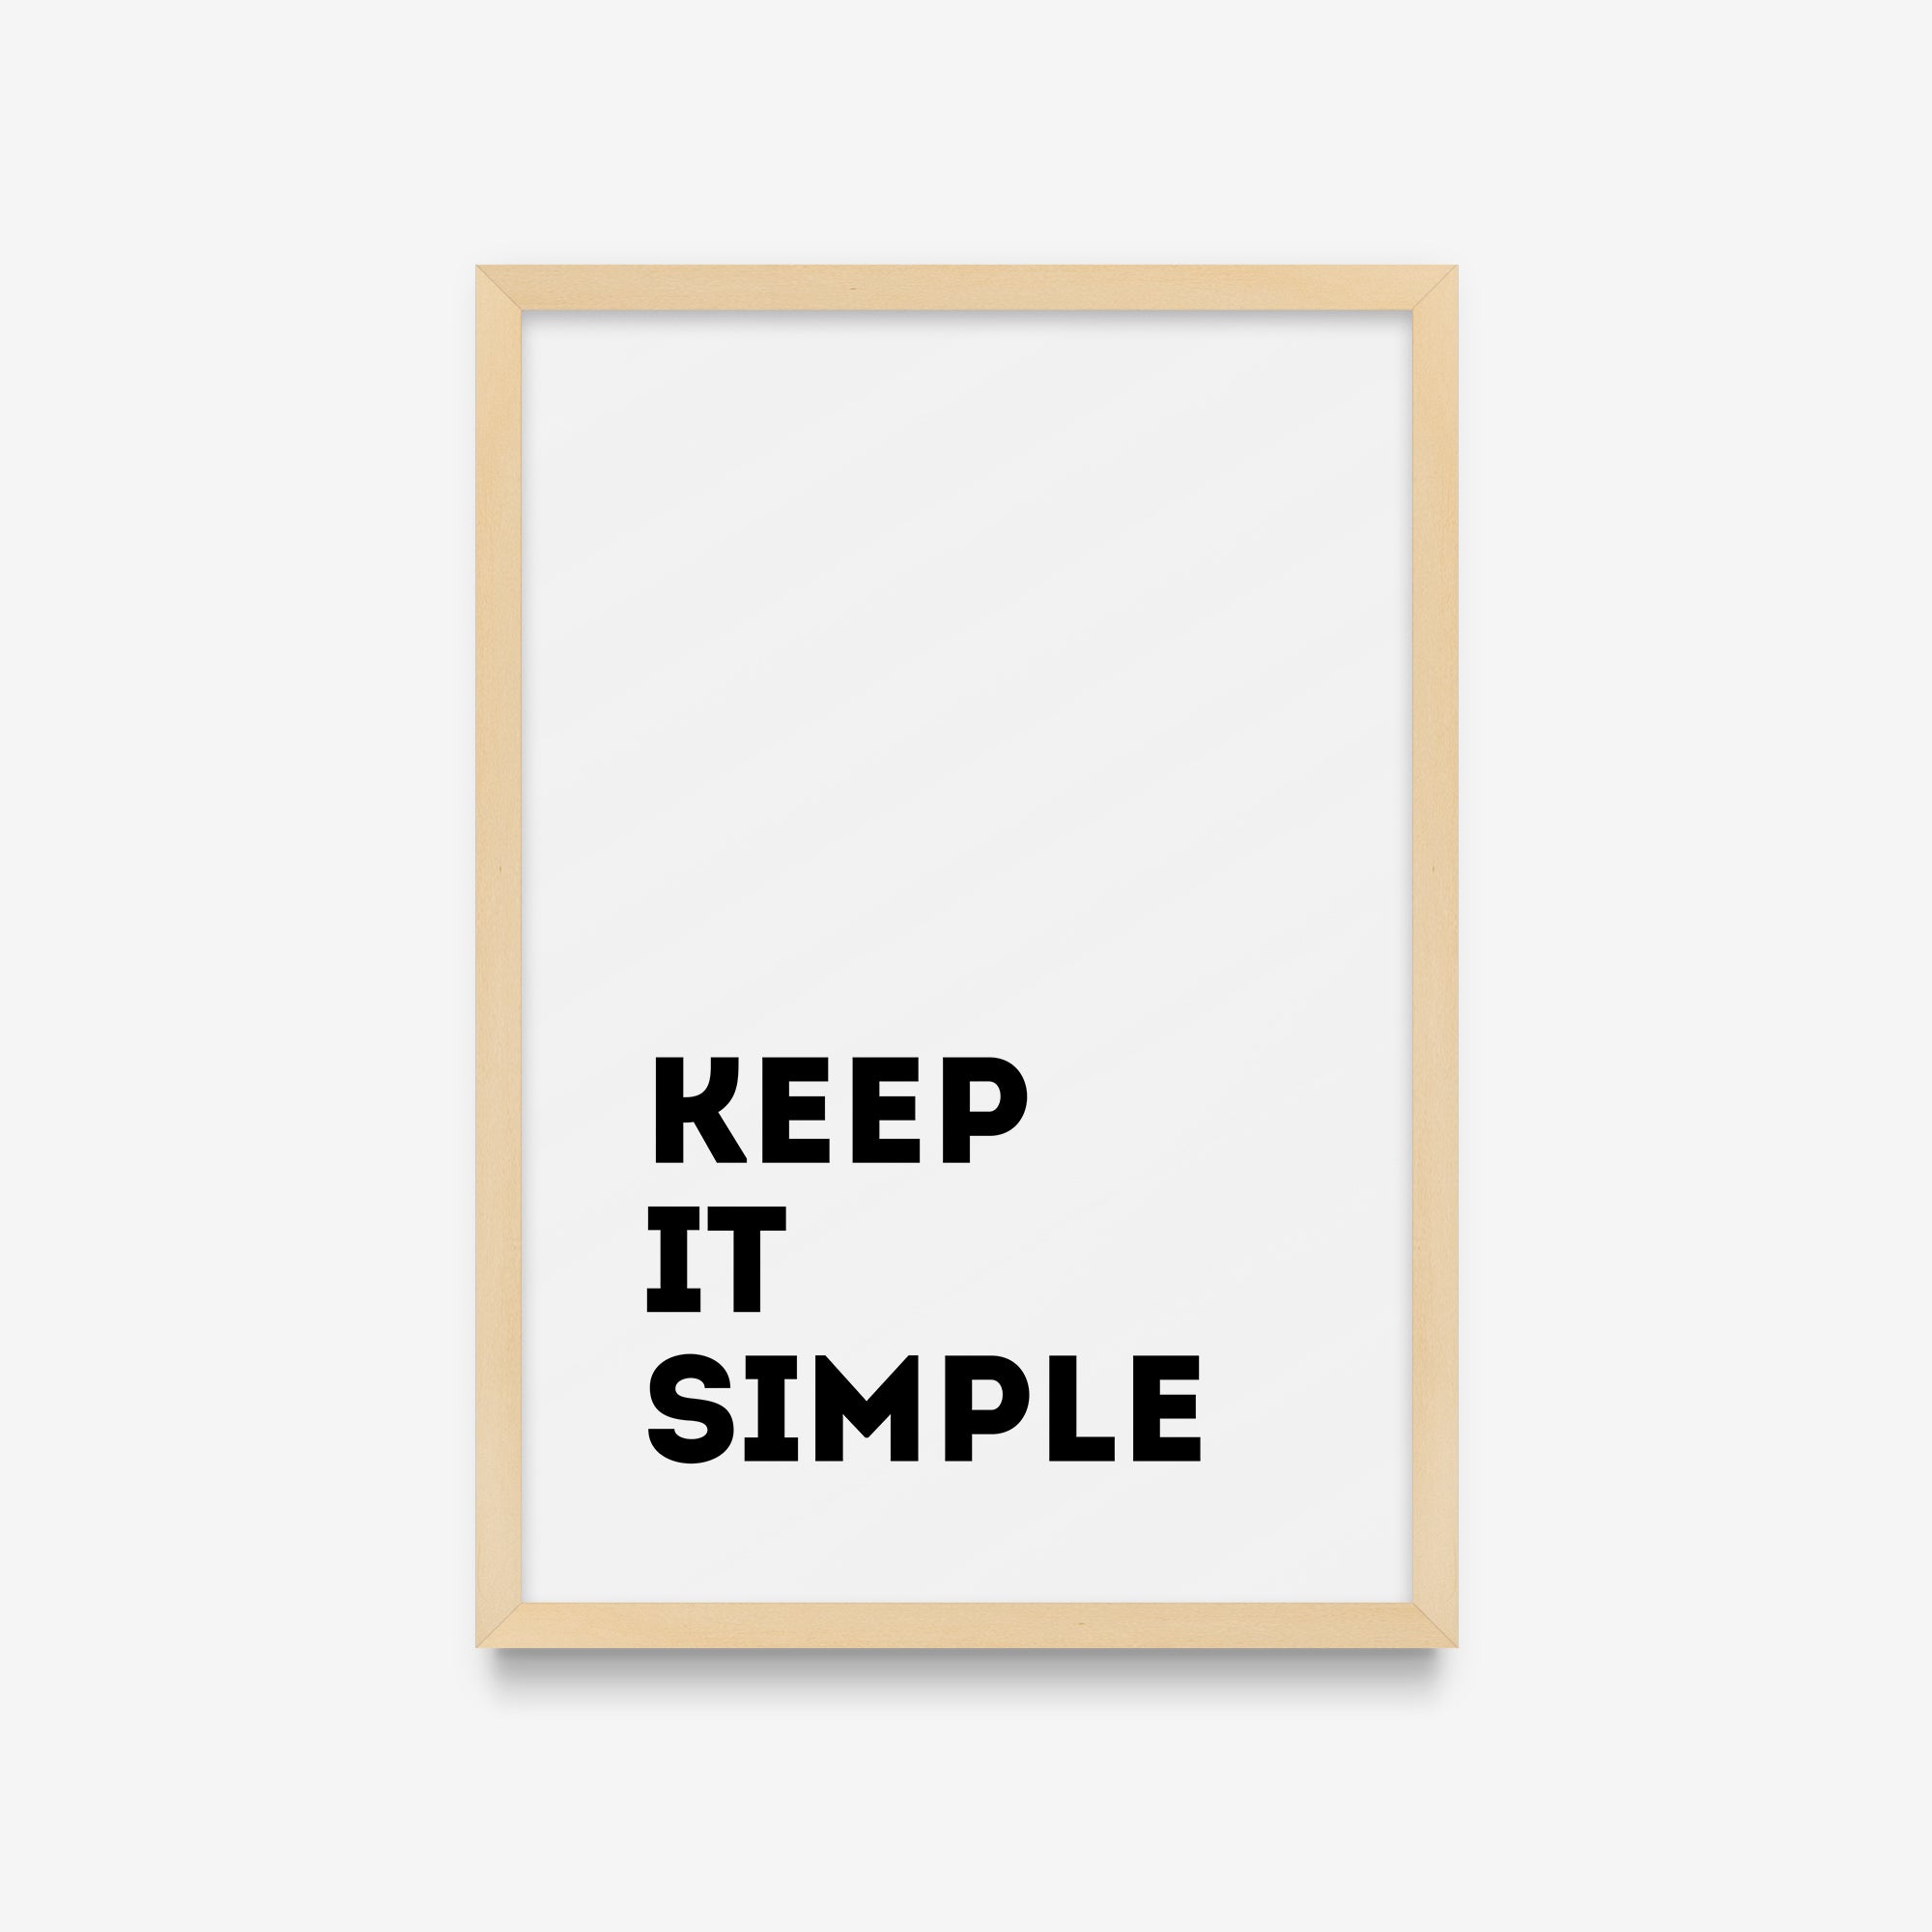 Frases - Keep it simple